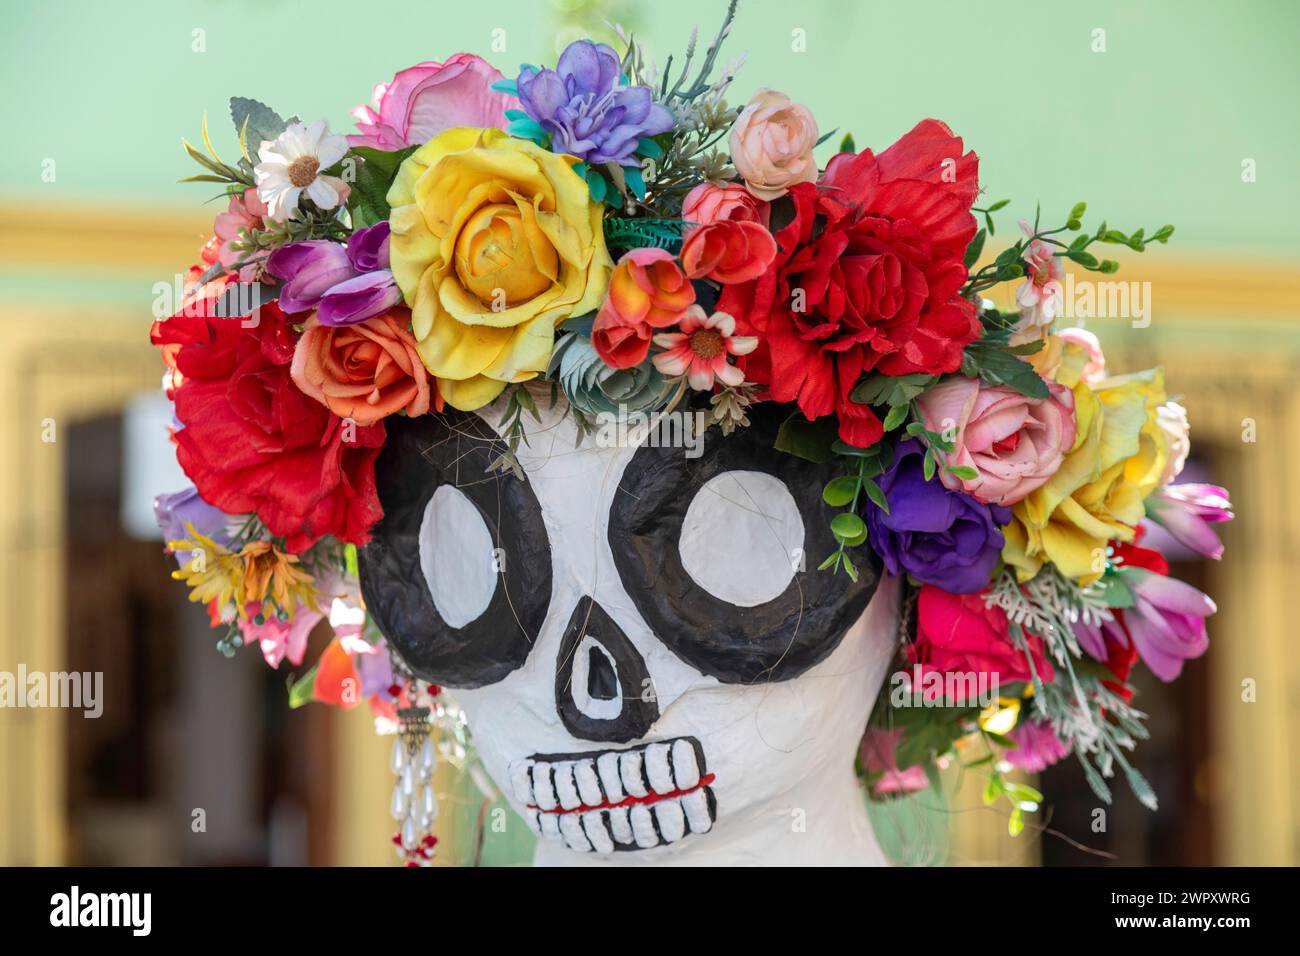 Oaxaca, México - Flores en una marioneta de papel maché. Foto de stock